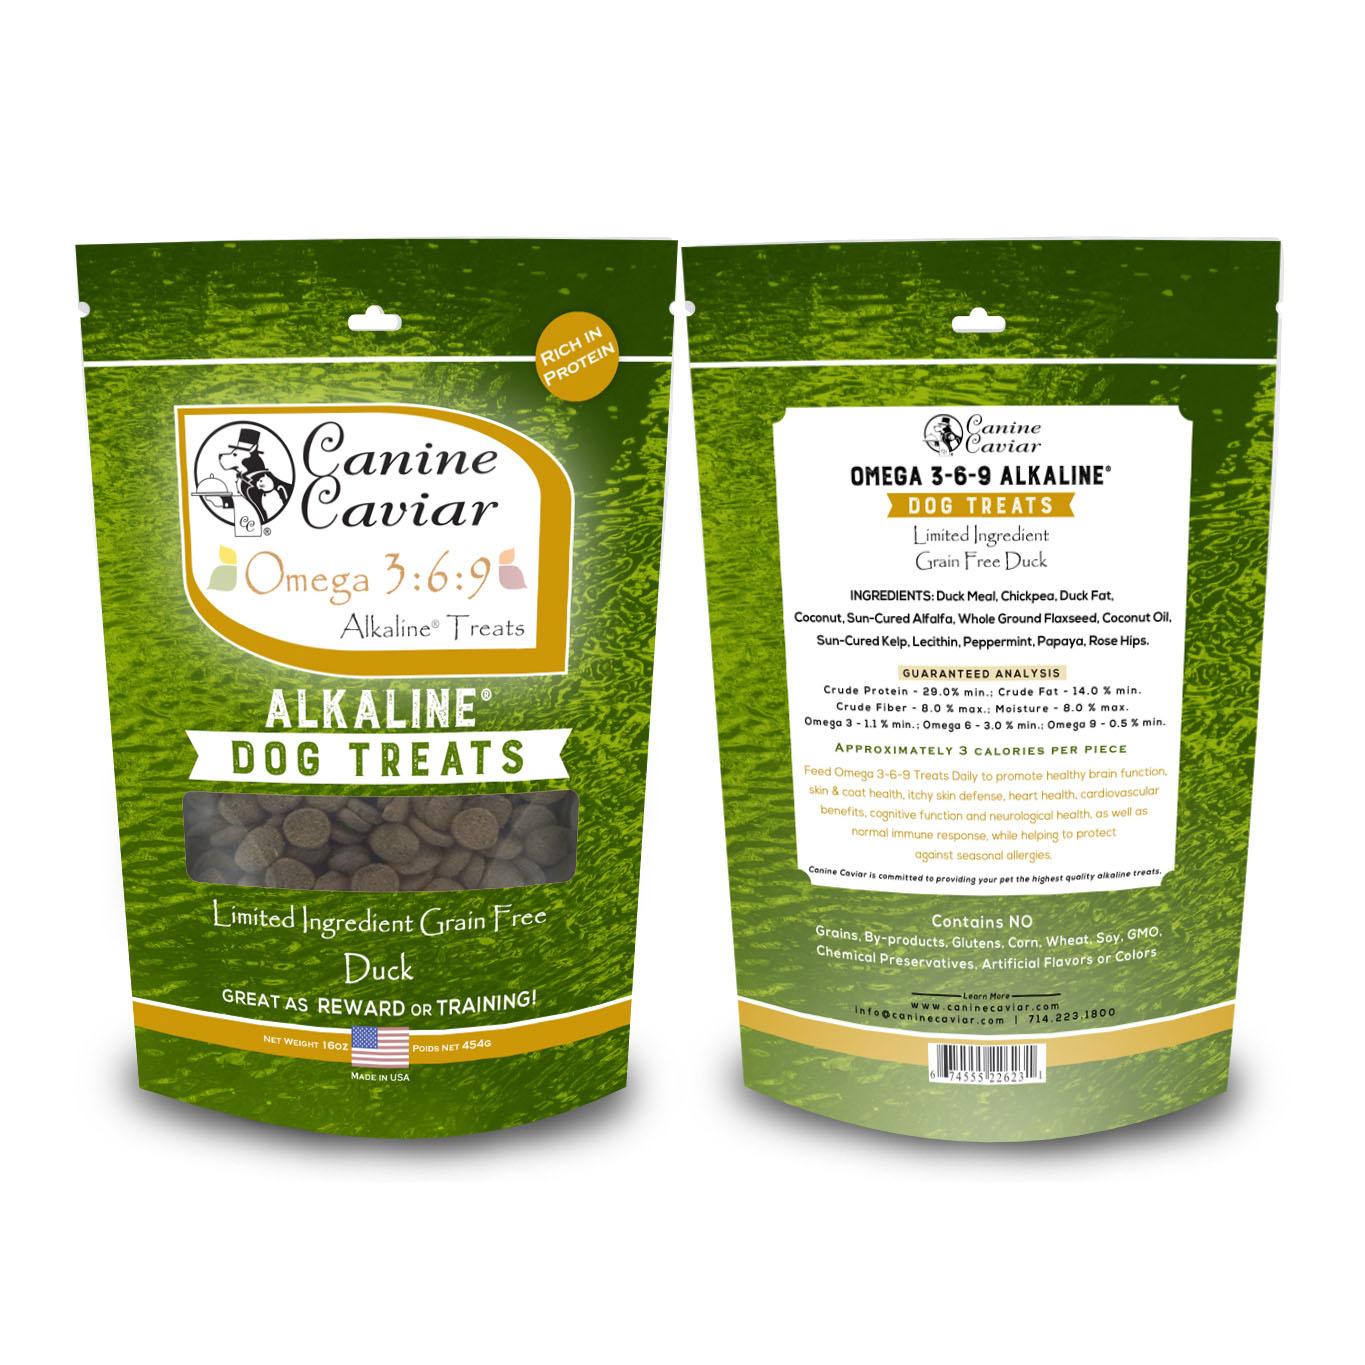 Canine Caviar Omega 3-6-9 Limited Ingredient Grain-Free Alkaline Dog Treats - Duck